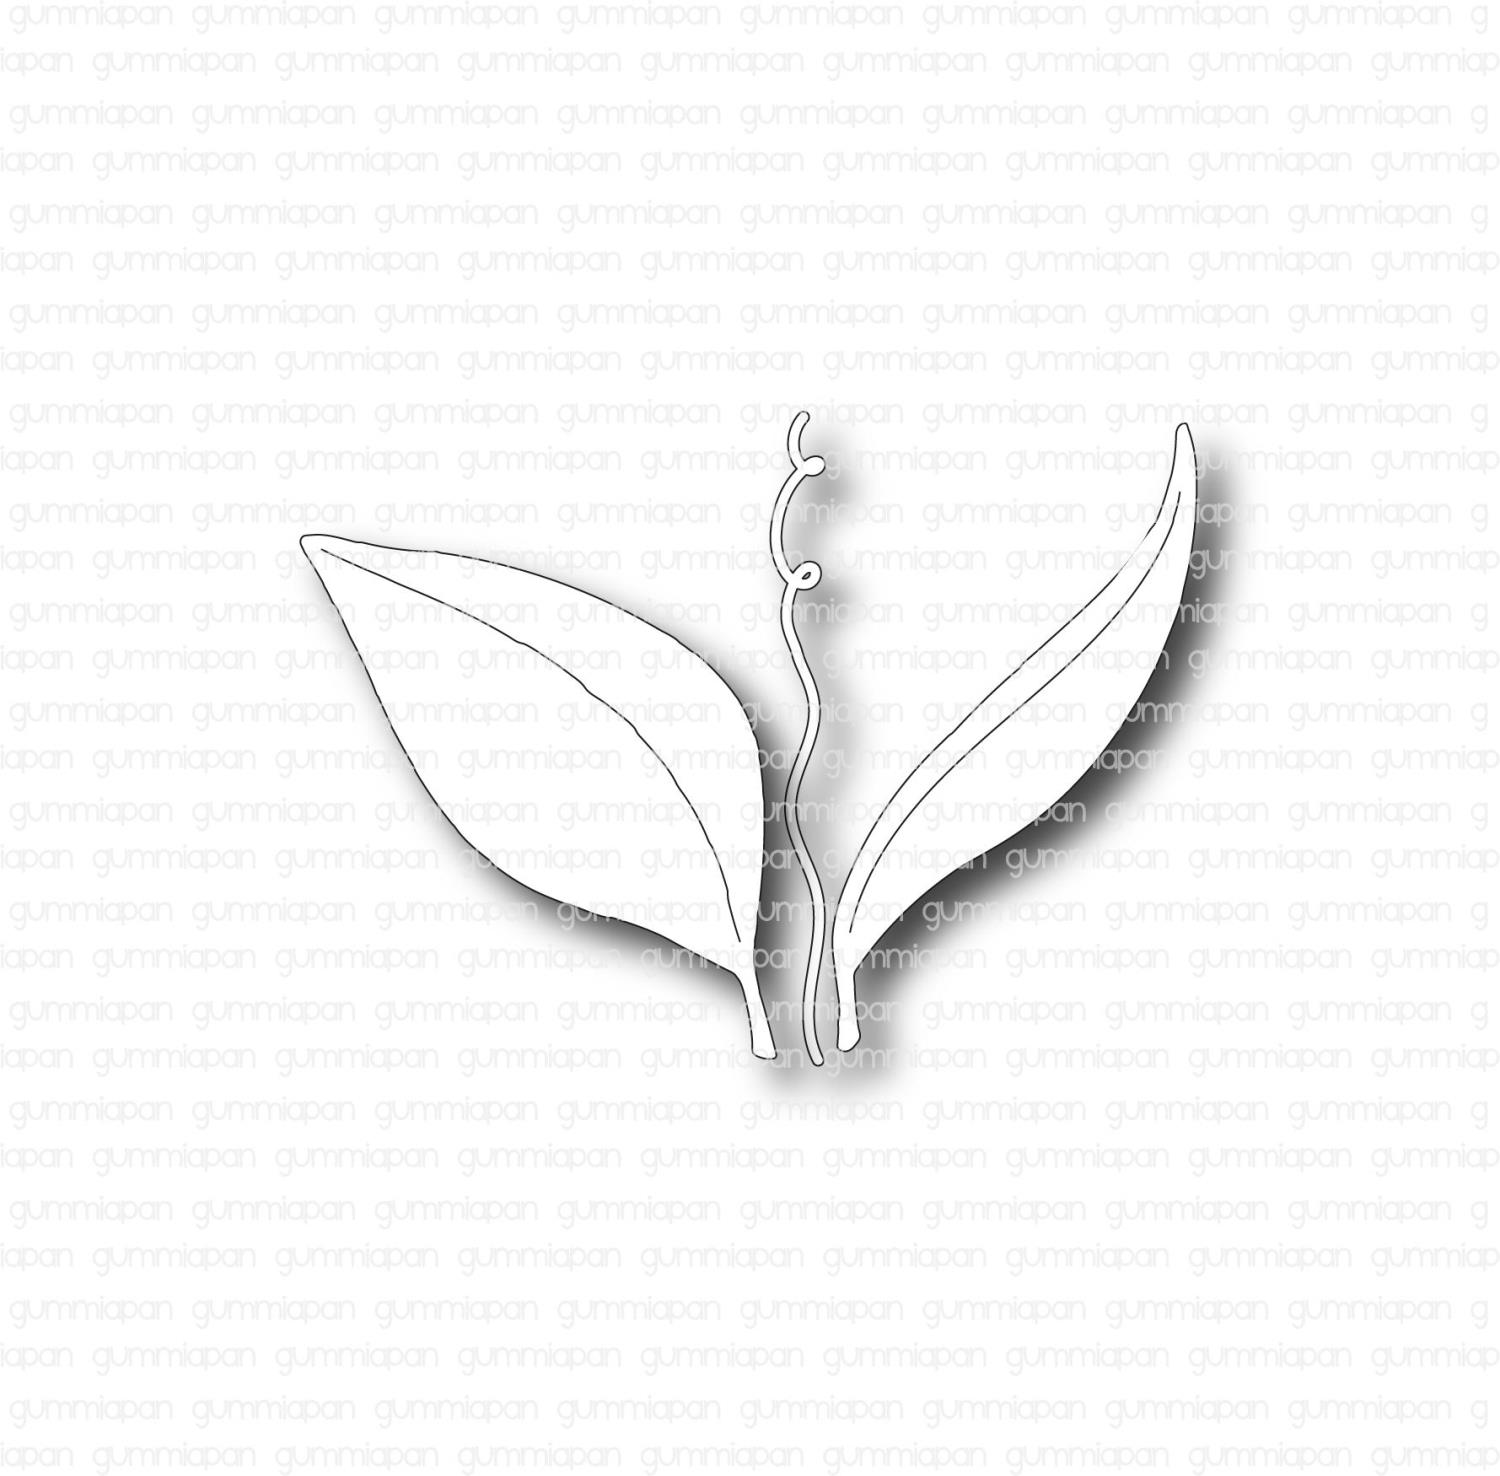 Gummiapan - Små bukettblad - Dies